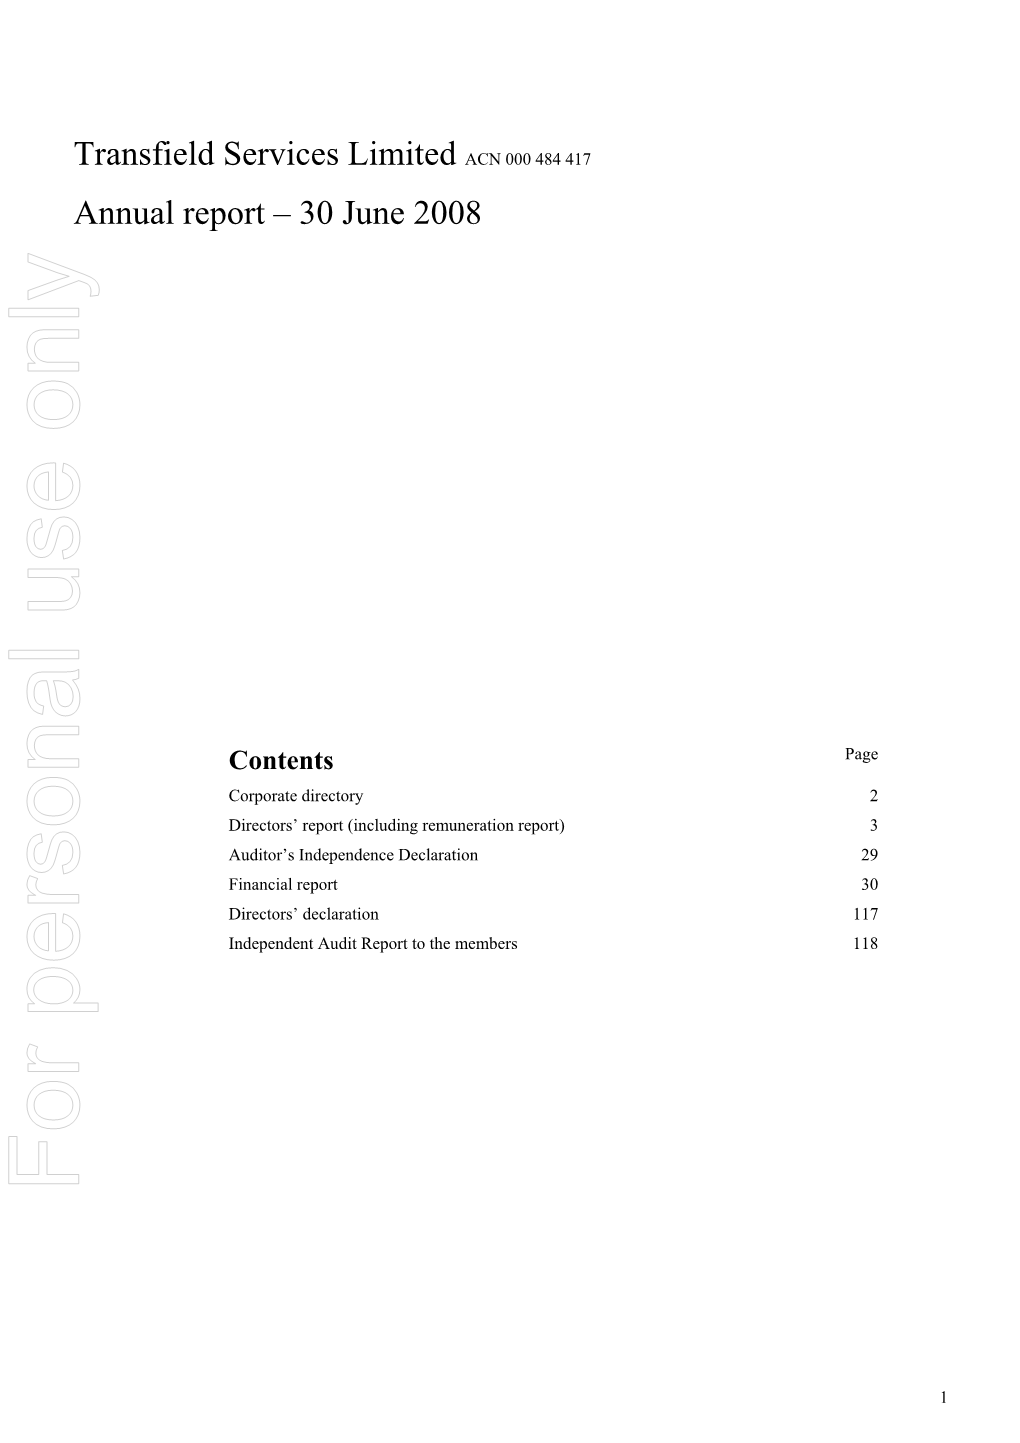 Annual Report – 30 June 2008